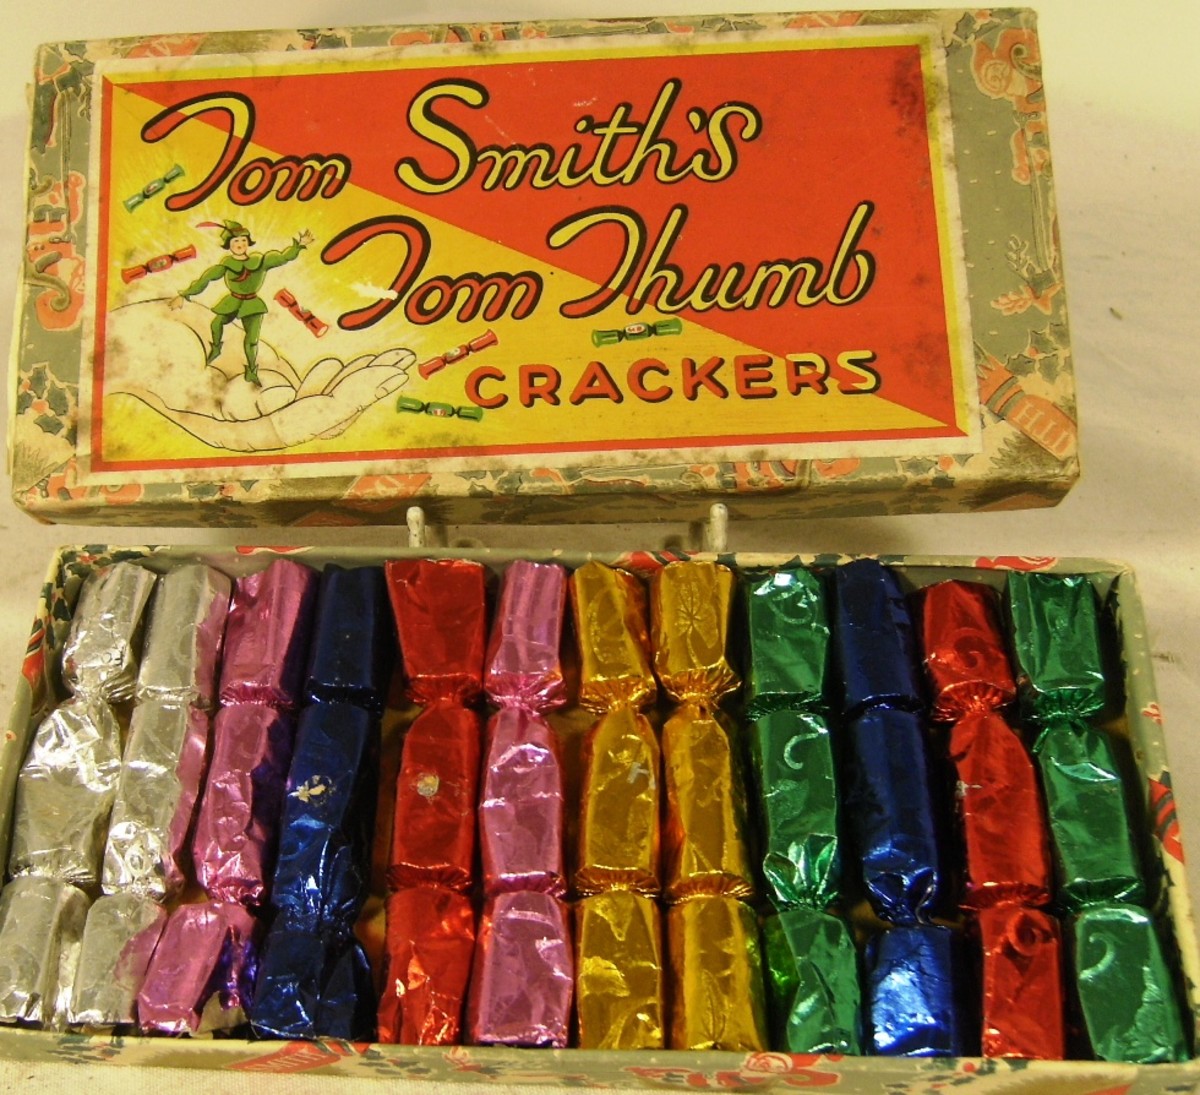 Original box of crackers